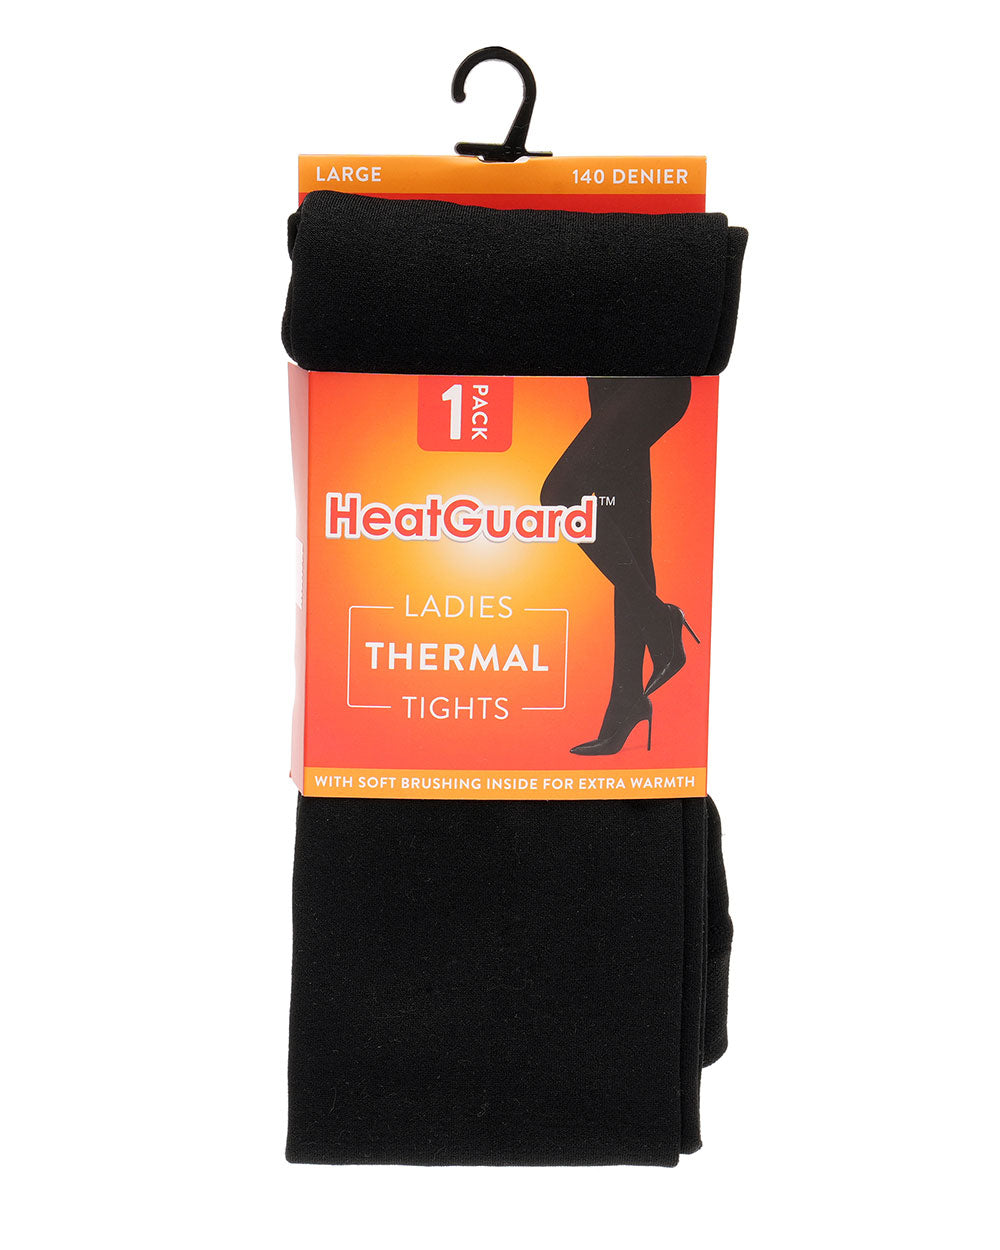 Thermal tights ladies black 140 dernier small medium large soft brushing inside 140 dernier